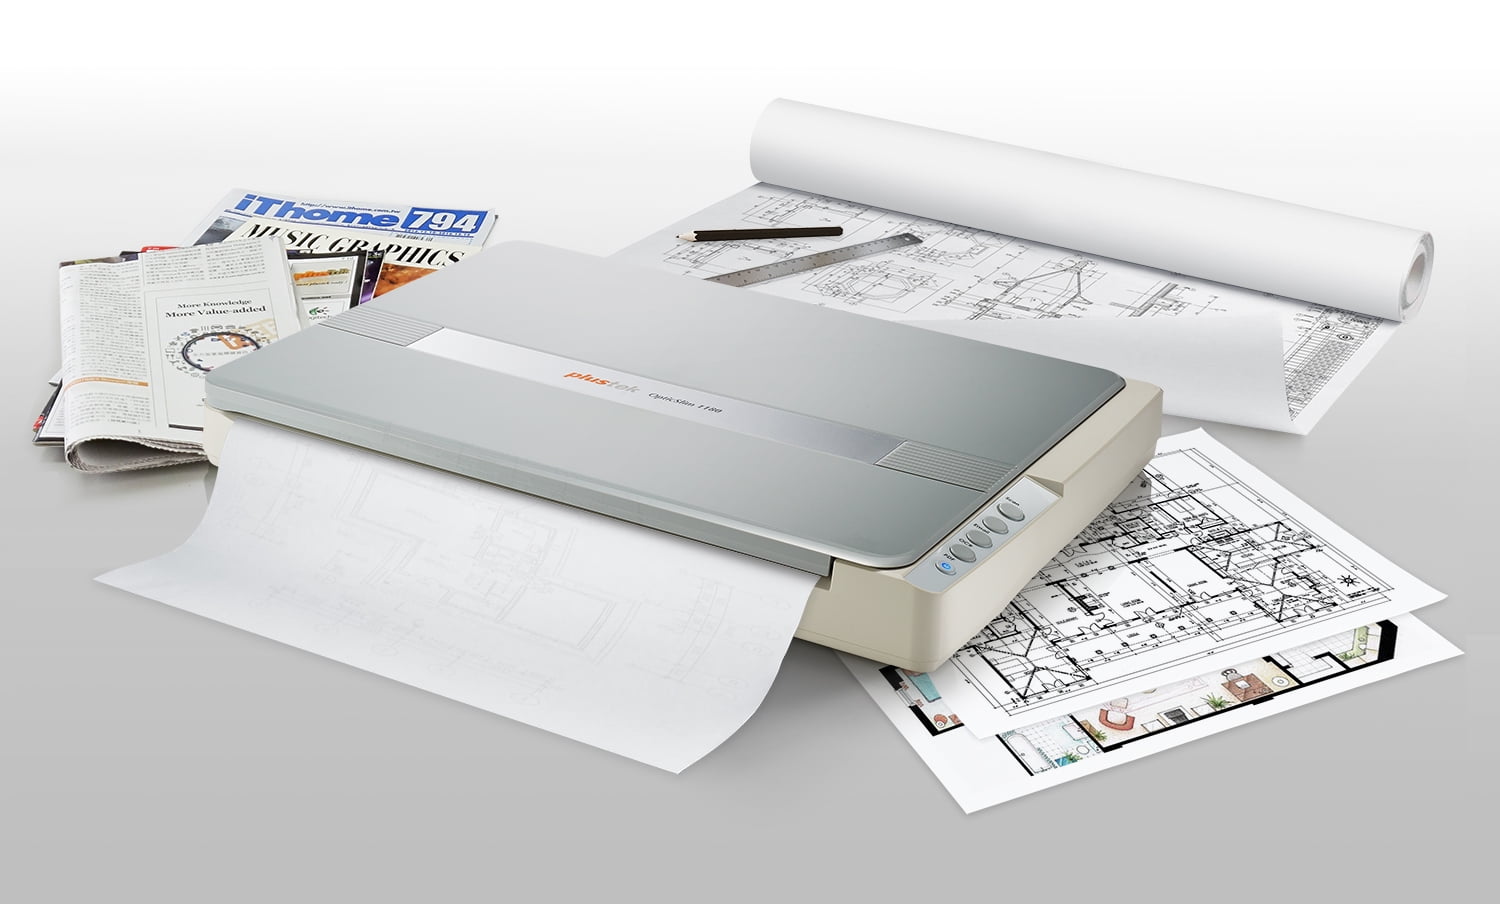 Plustek Large Format Flatbed Scanner OS 1180 - A3 / Tabloid/Legal Size  scan, Up to 1200 DPI scan Resolution for Blueprints and Document. Design  for